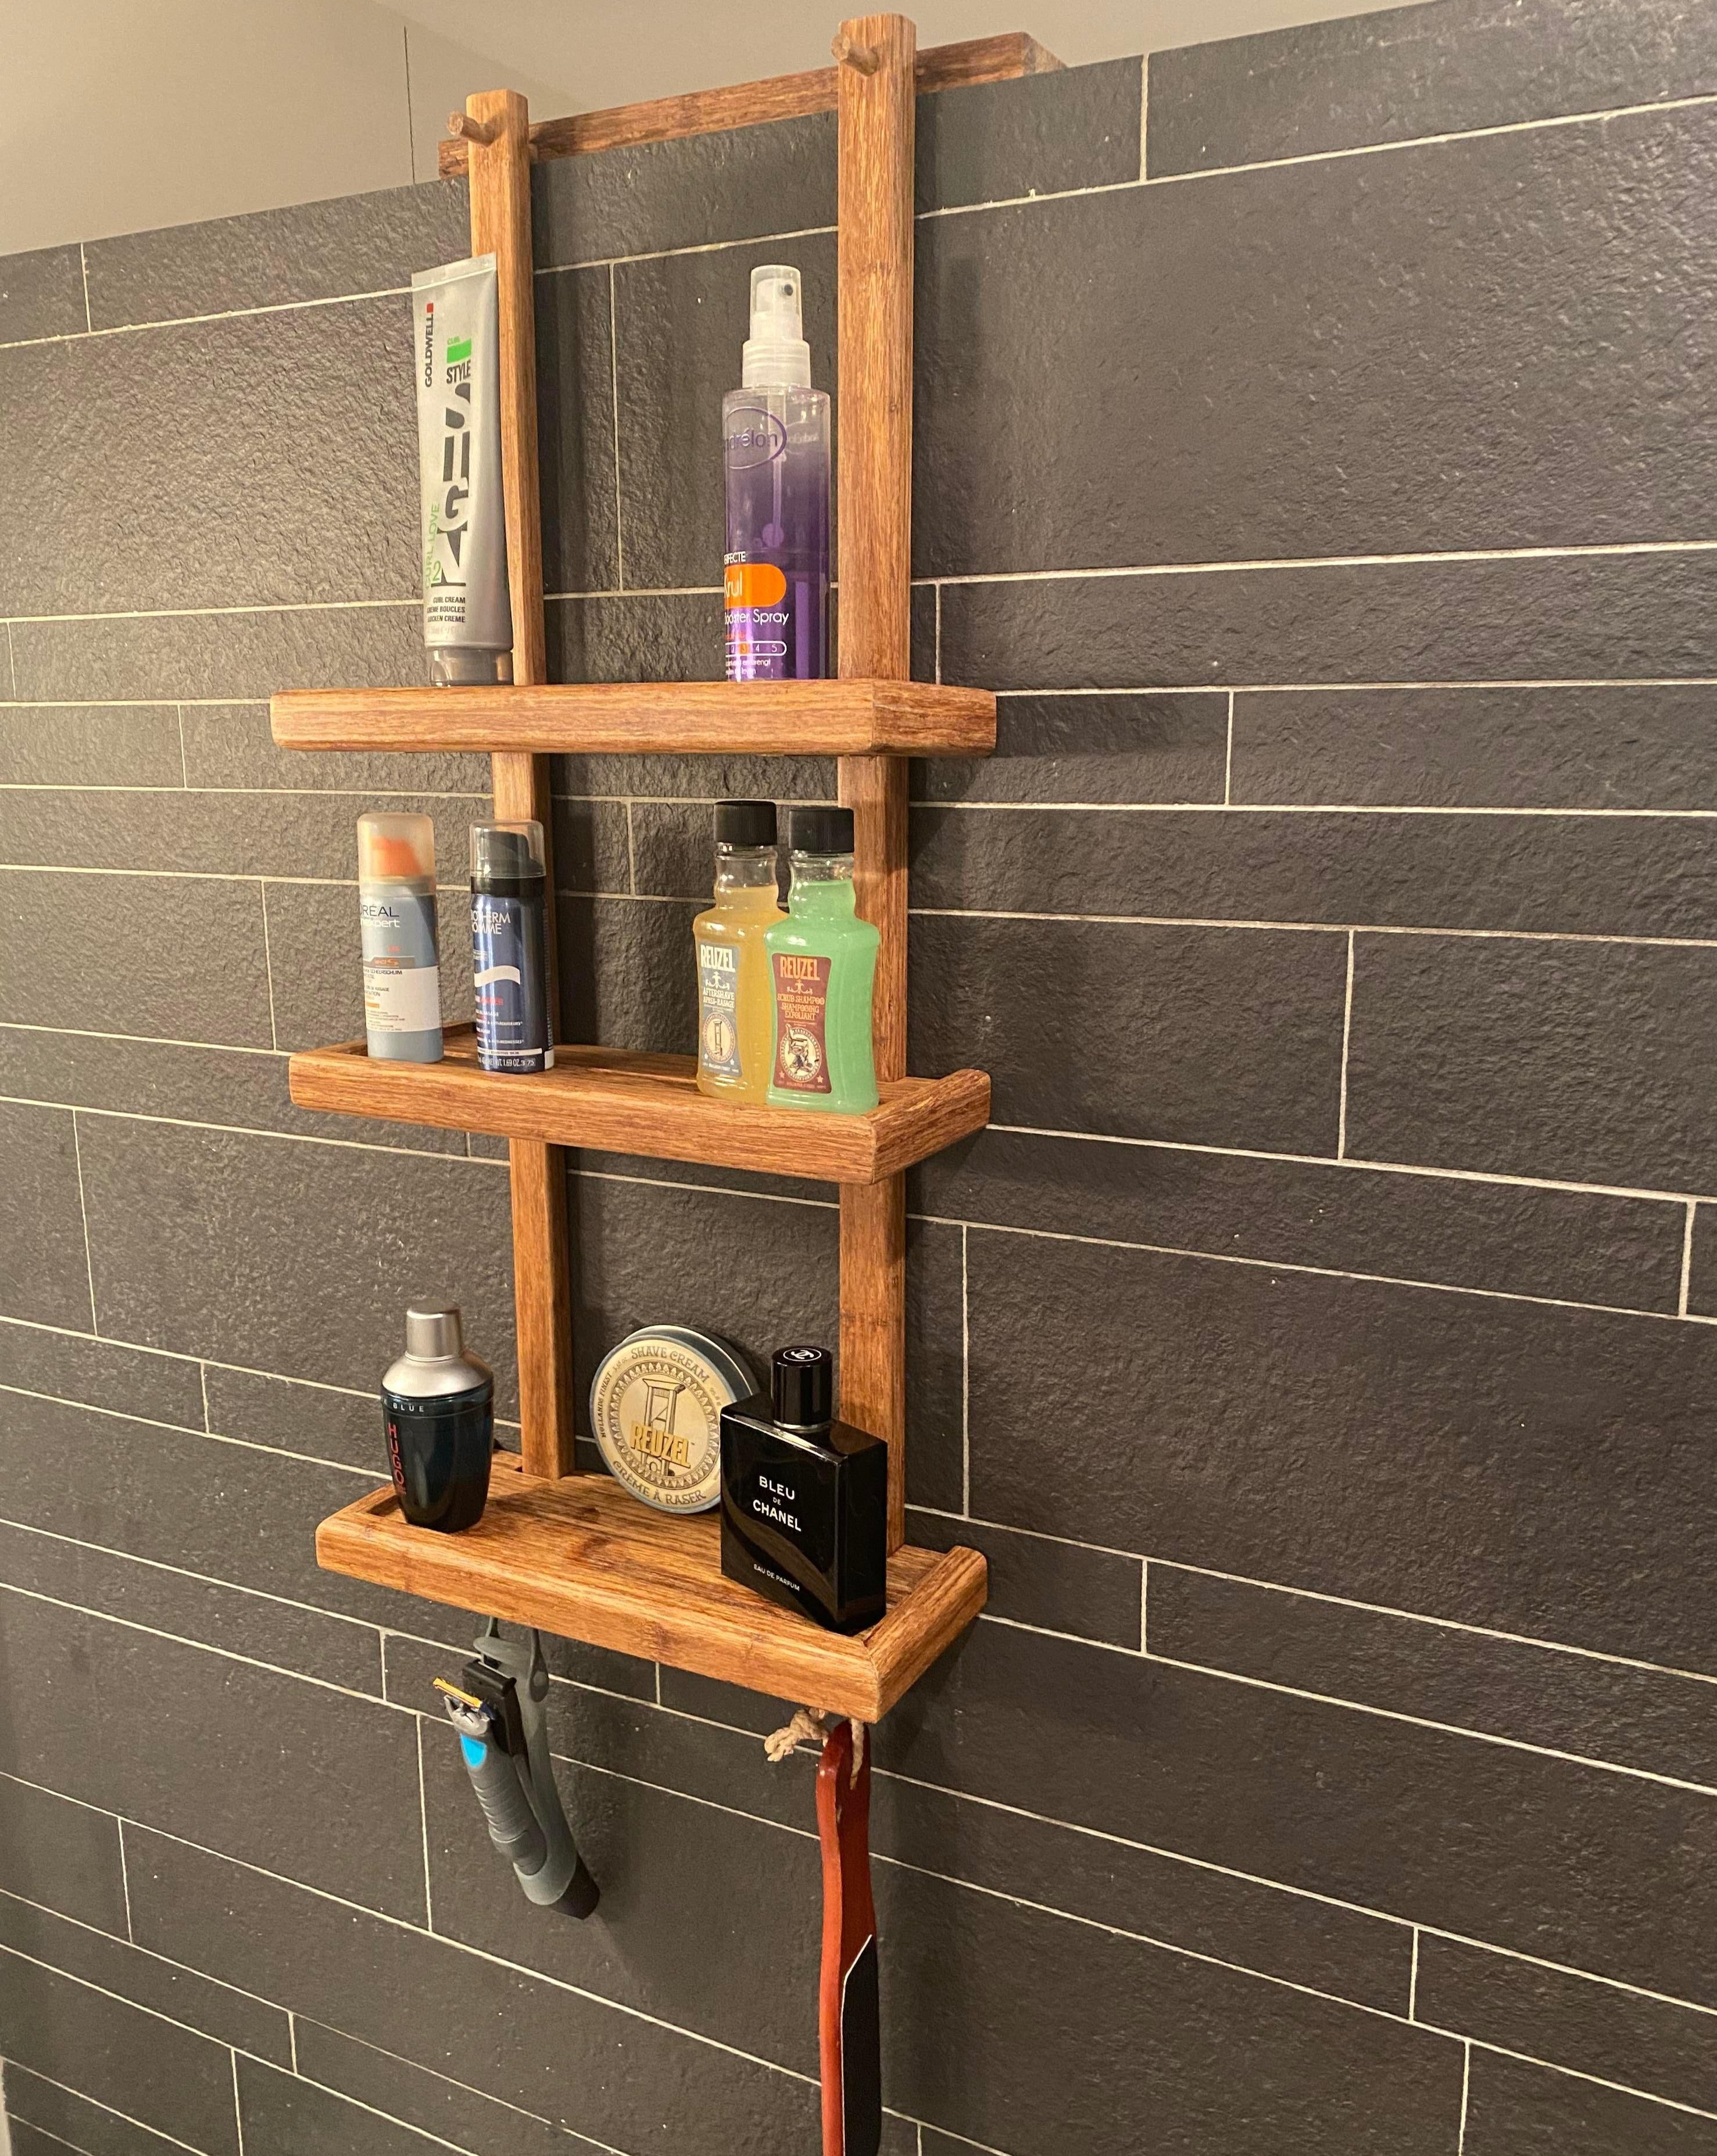 NEWRAIN Shower Rack, Wood Shower Shelves with Towel Holders for